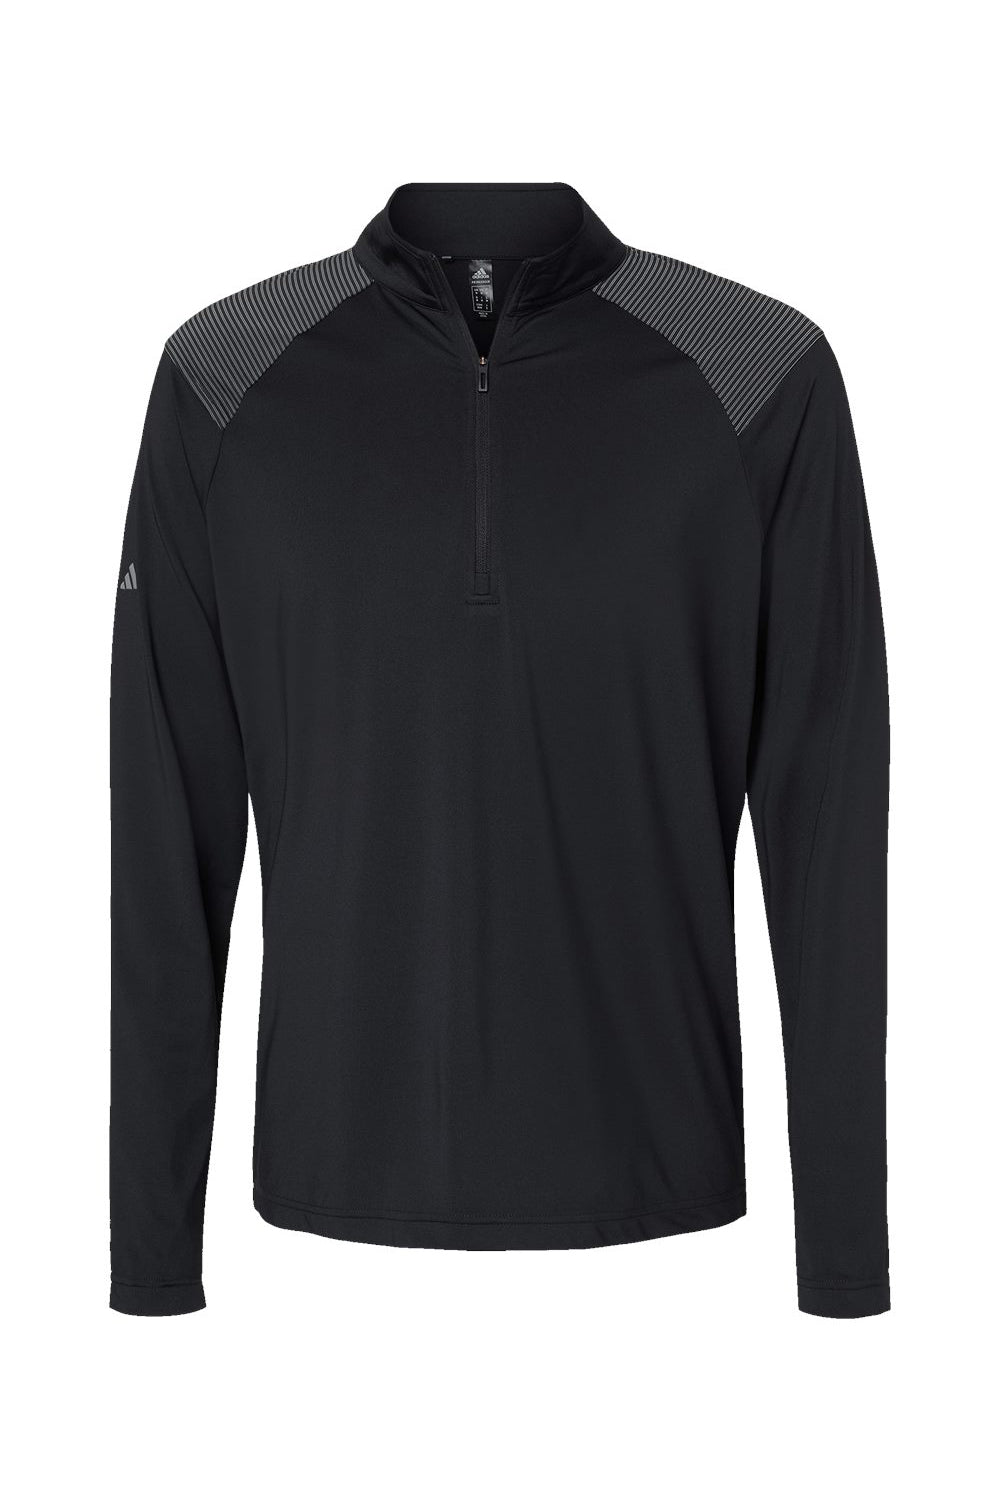 Adidas A520 Mens Shoulder Stripe Moisture Wicking 1/4 Zip Sweatshirt Black Flat Front